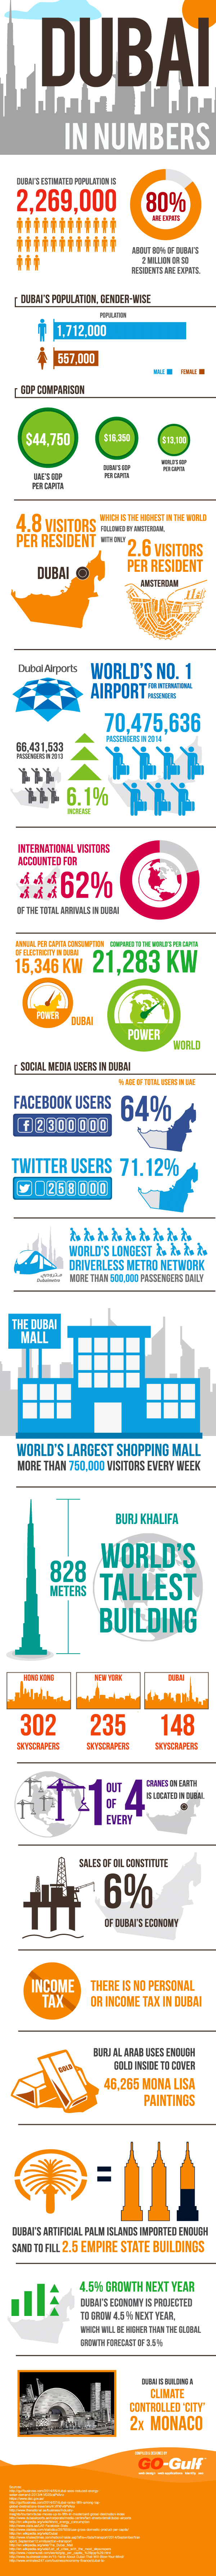 Dubai Interesting Statistics and Facts